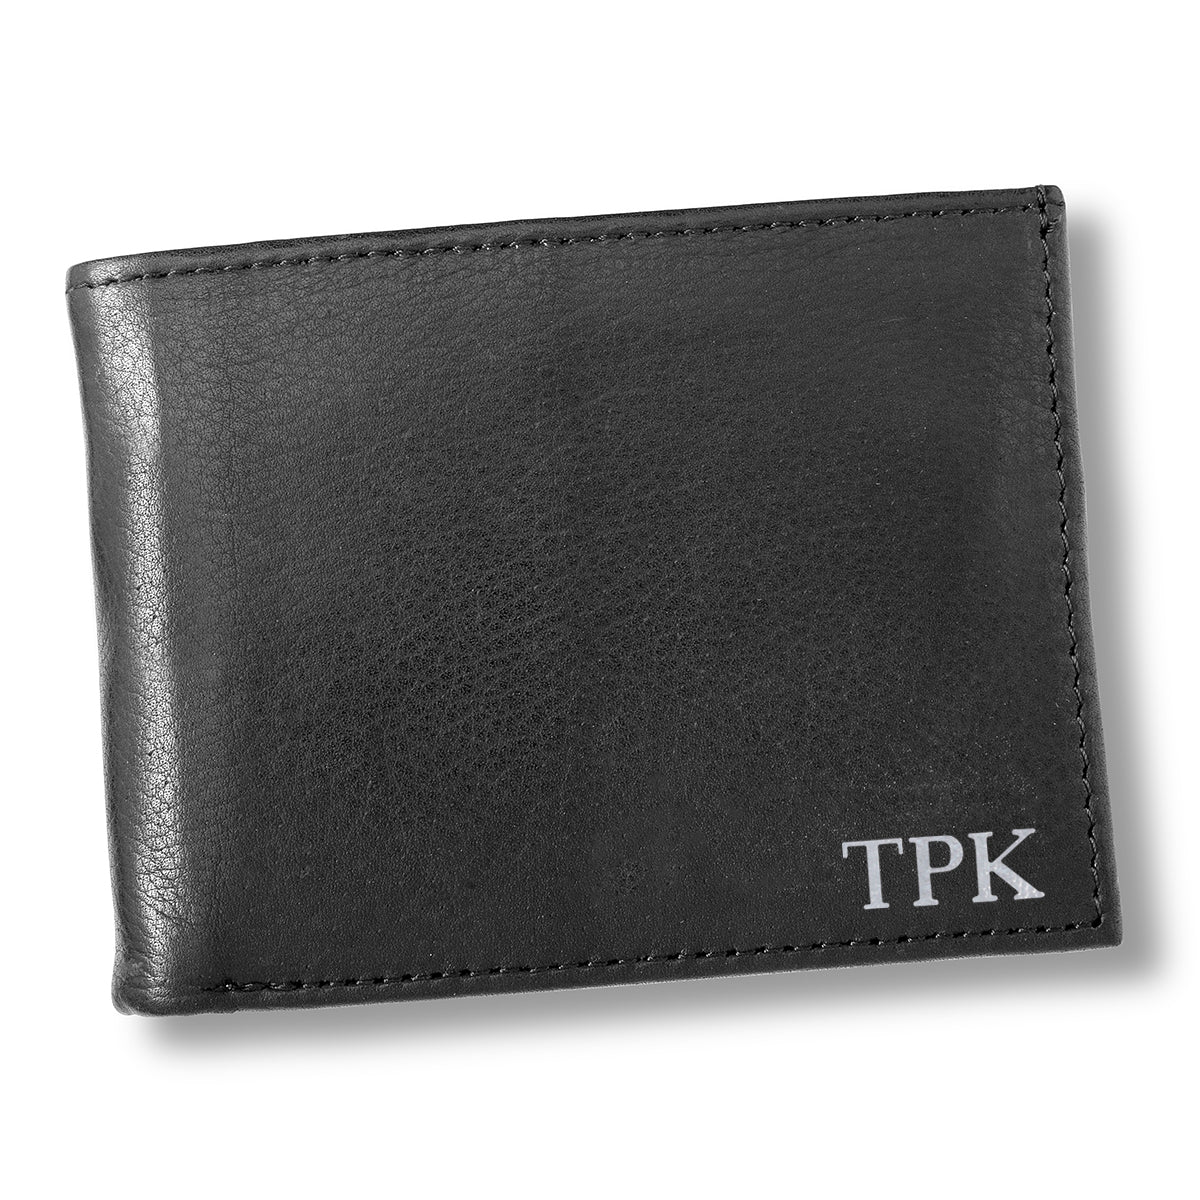 Personalized Black Borello Leather Convertible Wallet